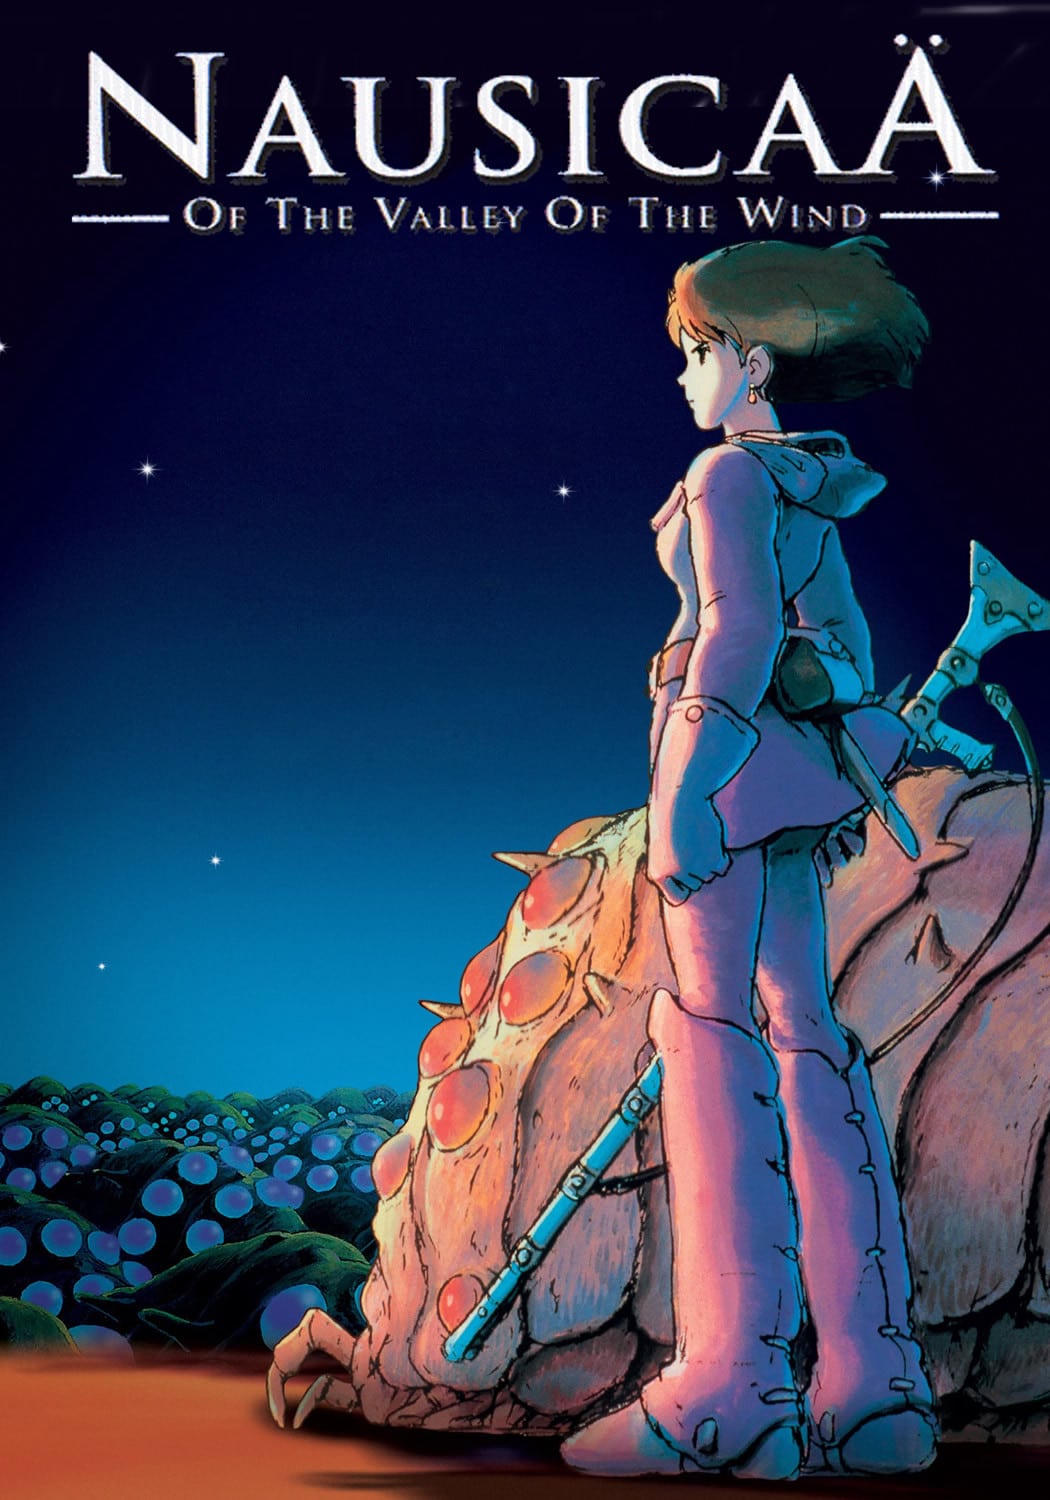 Hayao Miyazaki Movies